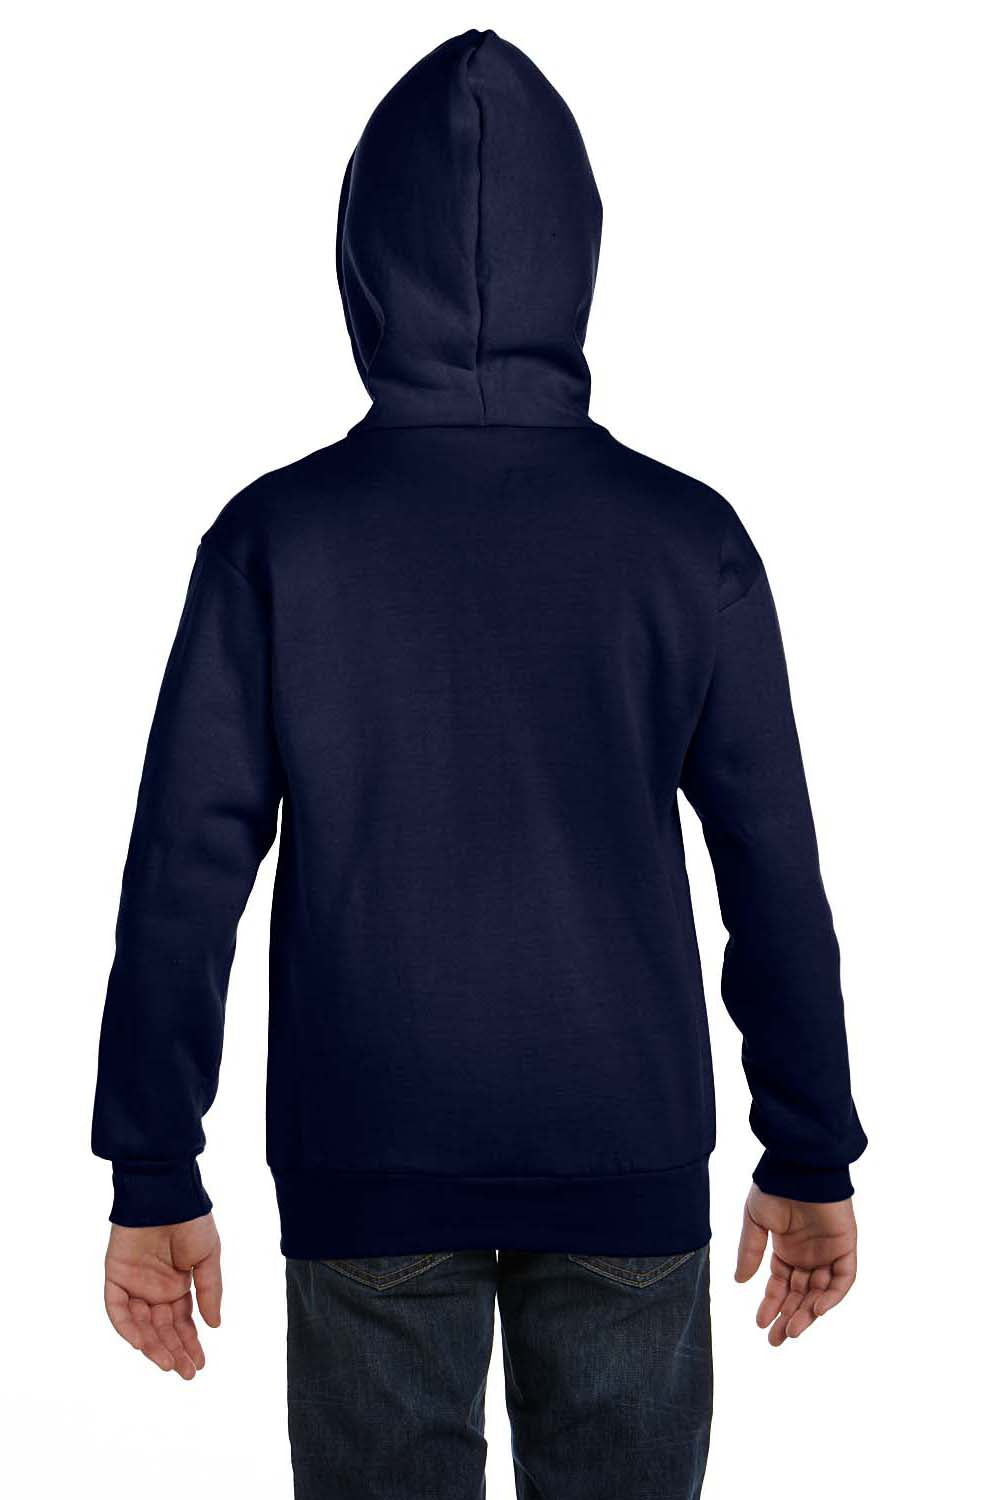 Hanes P480 Youth EcoSmart Print Pro XP Full Zip Hooded Sweatshirt Hoodie Navy Blue Back